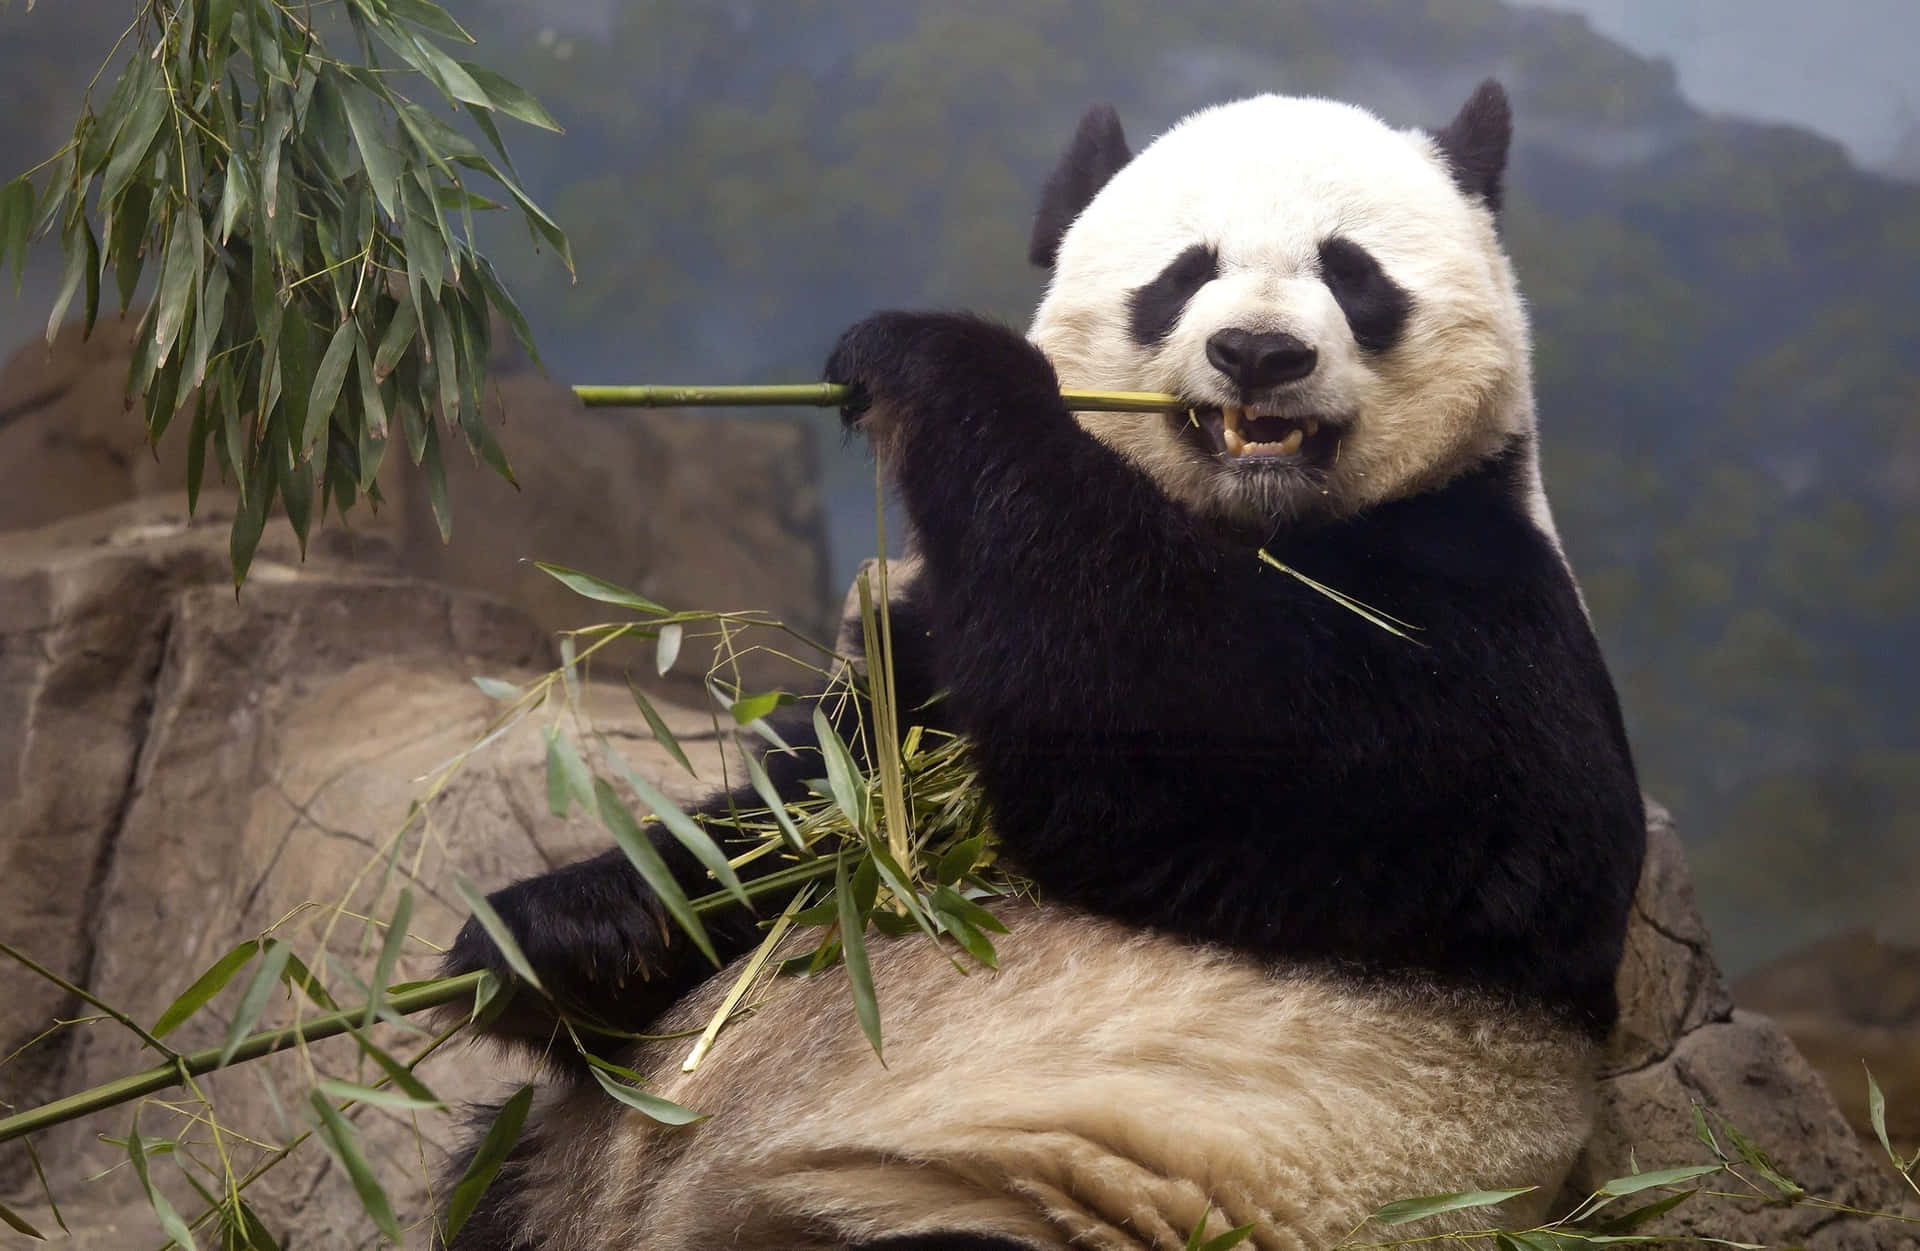 "A peacefully snoozing Giant Panda"